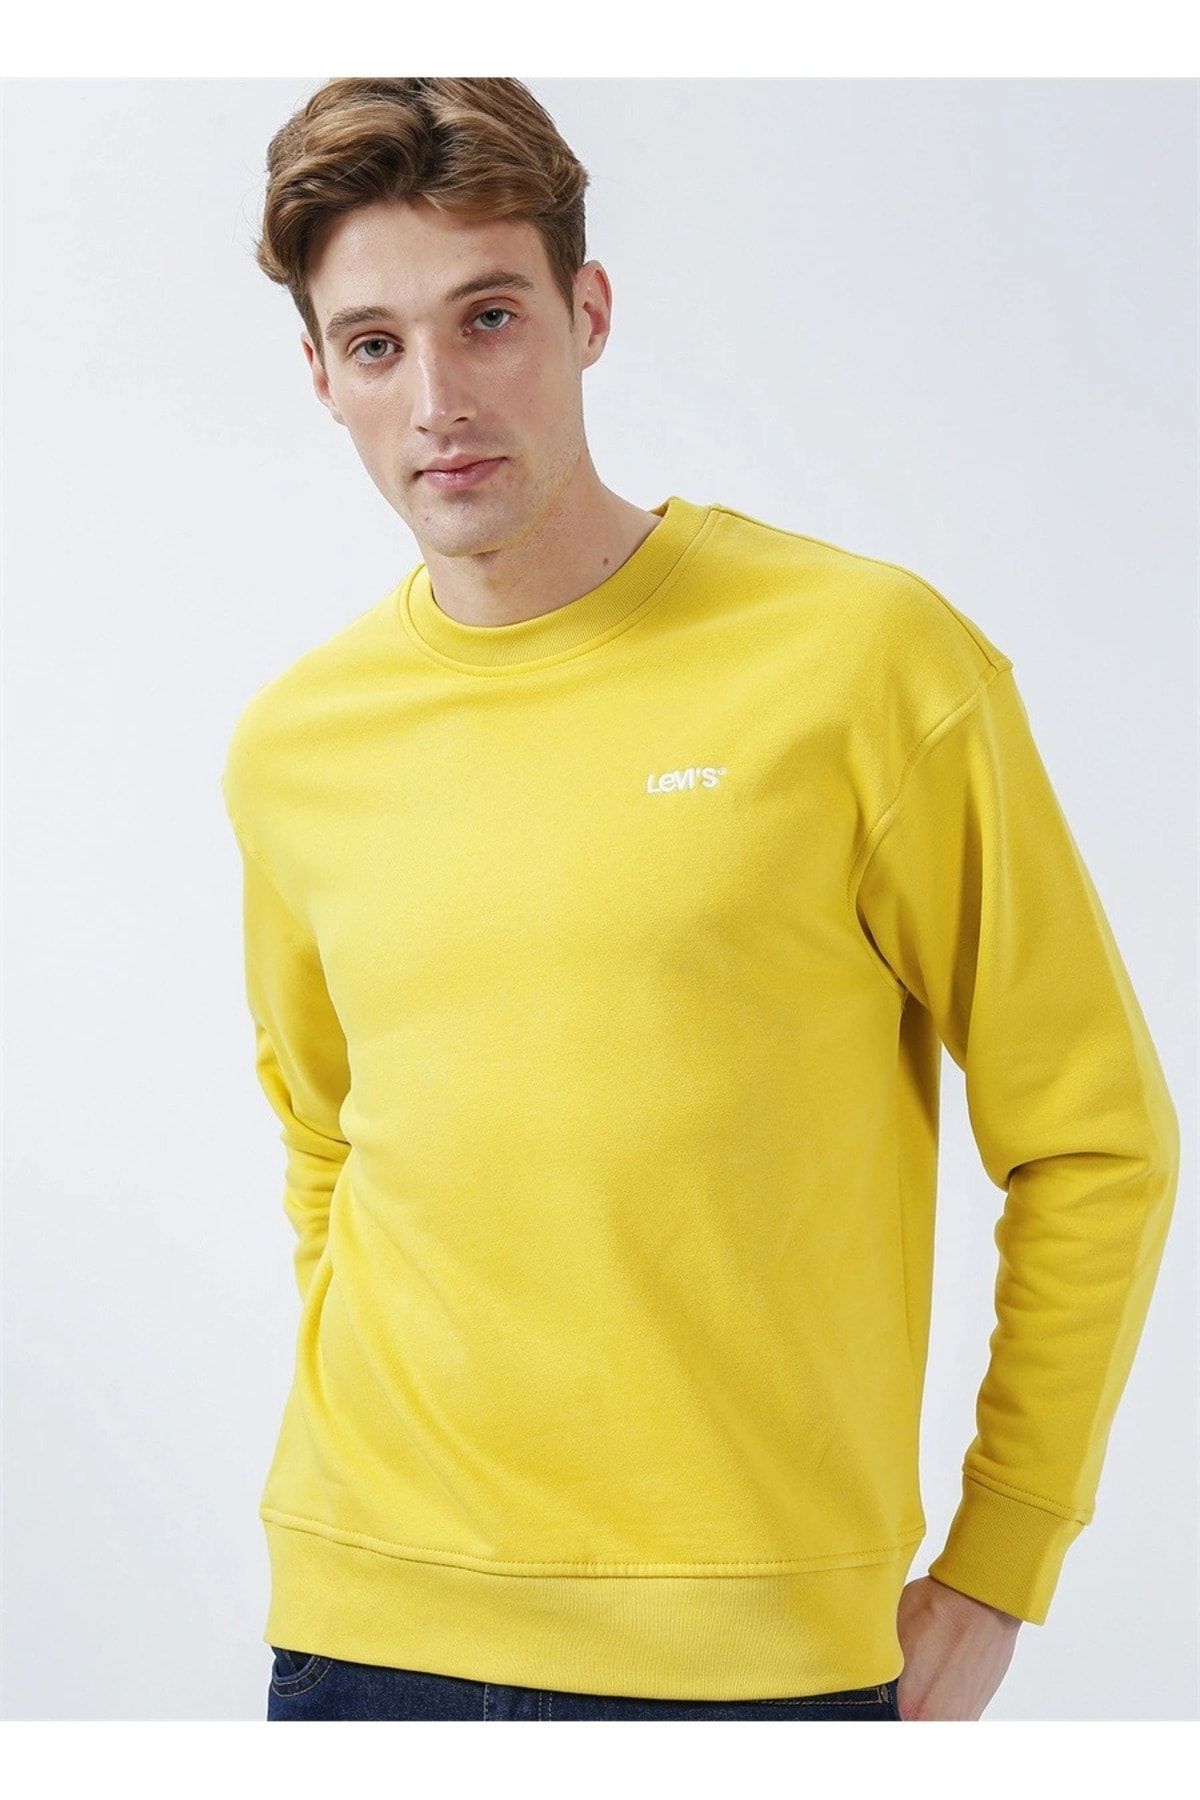 Levi's Erkek Bisiklet Yaka Sarı Sweatshirt - A7750-0001